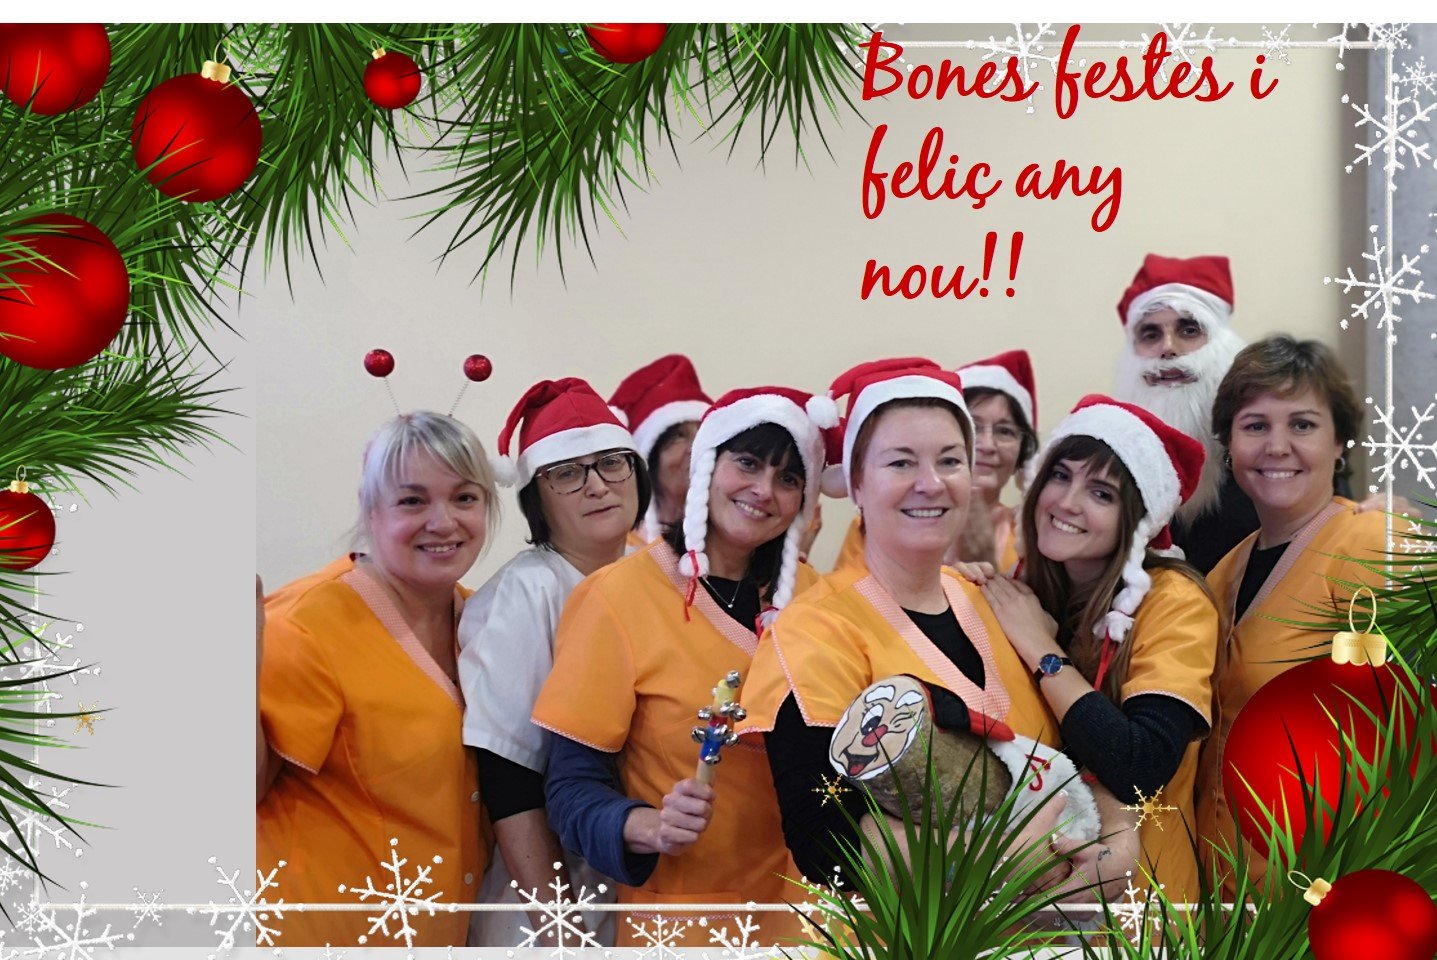 Bones Festes i Feliç Any Nou!!